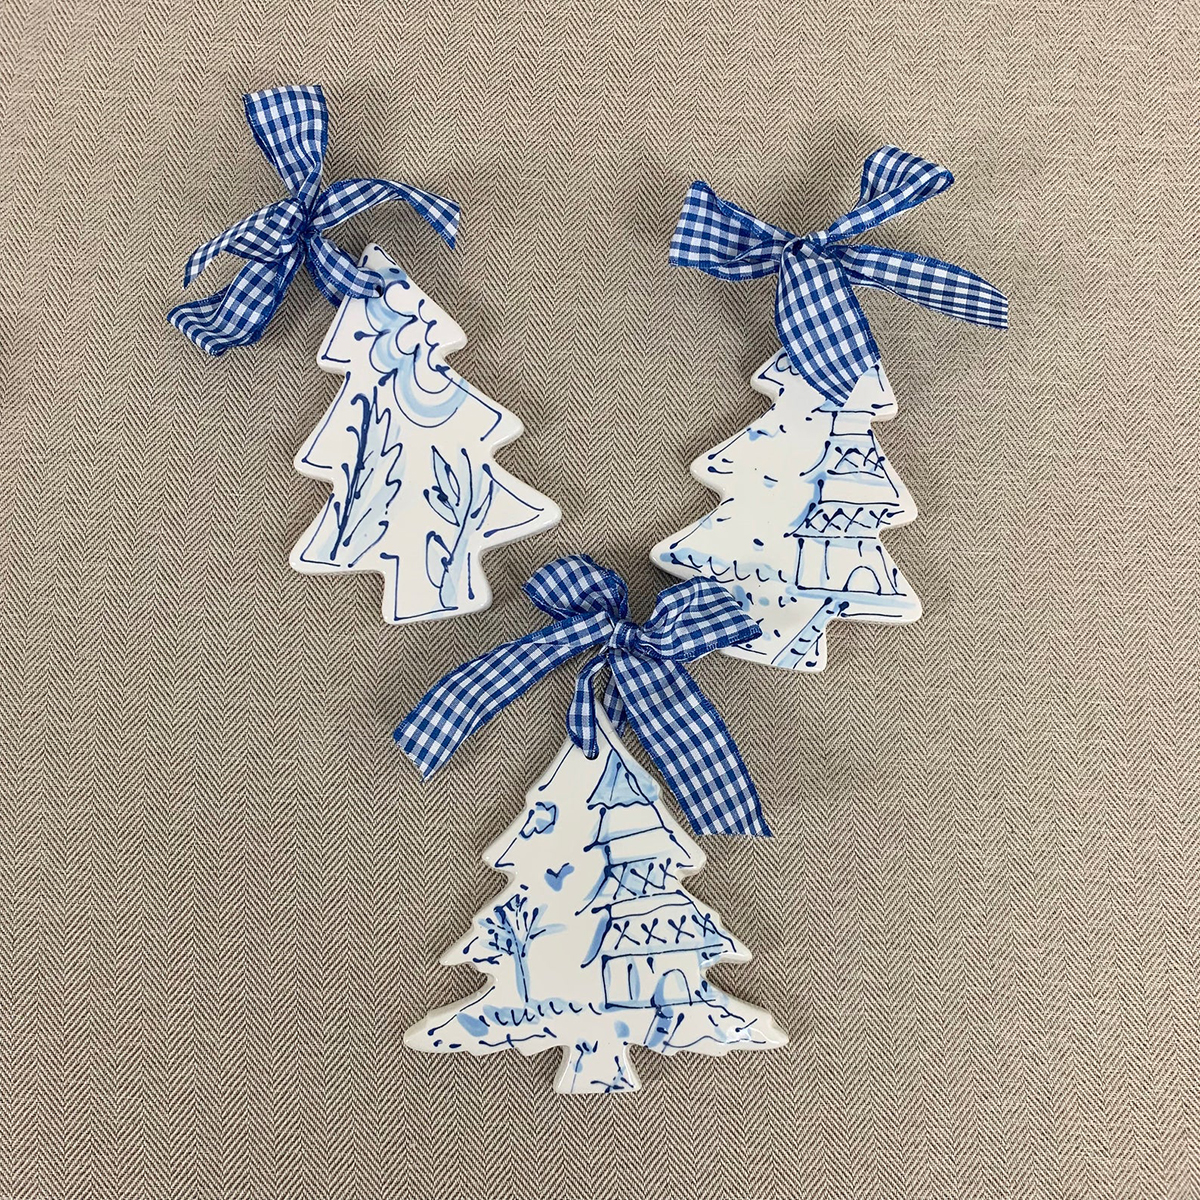 https://carlyriordan.com/wp-content/uploads/2019/11/Chinoiserie-Ornaments.jpg